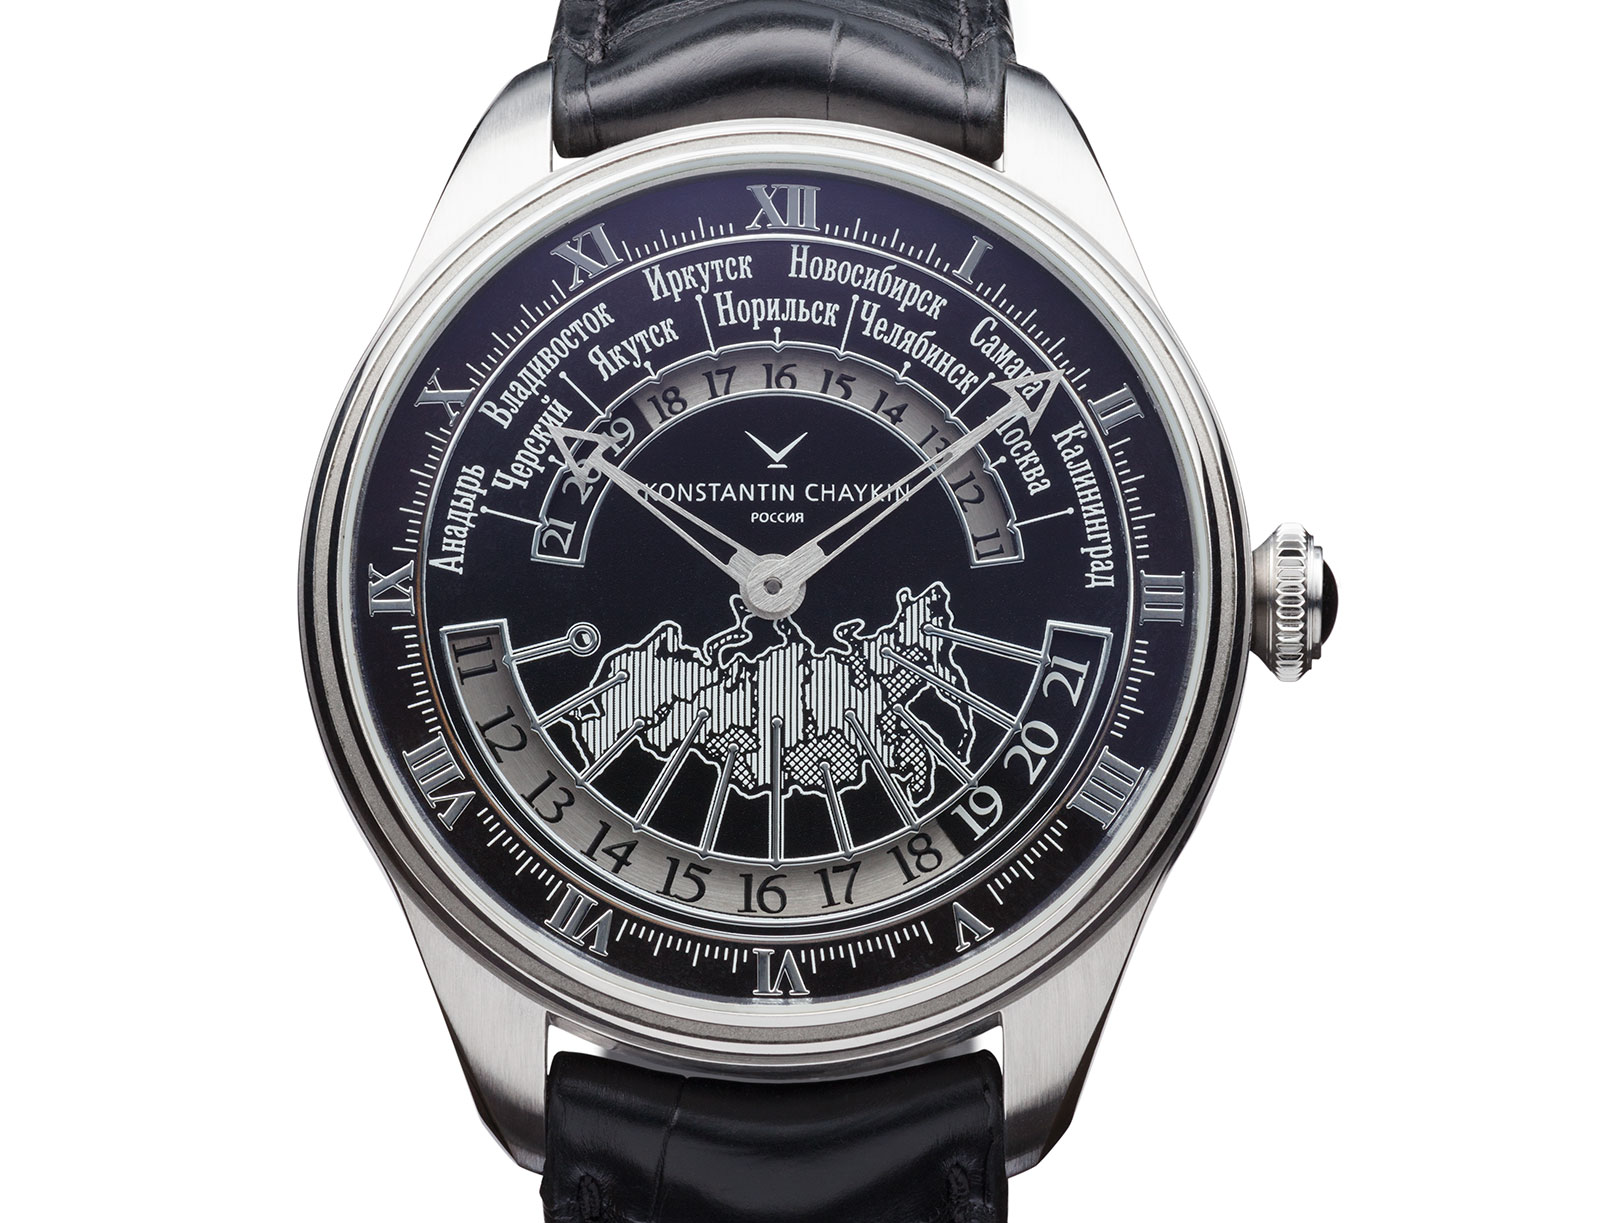 Les fabuleuses créations du maître horloger Russe Konstantin Chaykin Konstantin%2BChaykin%2BRussian%2BTime%2B1